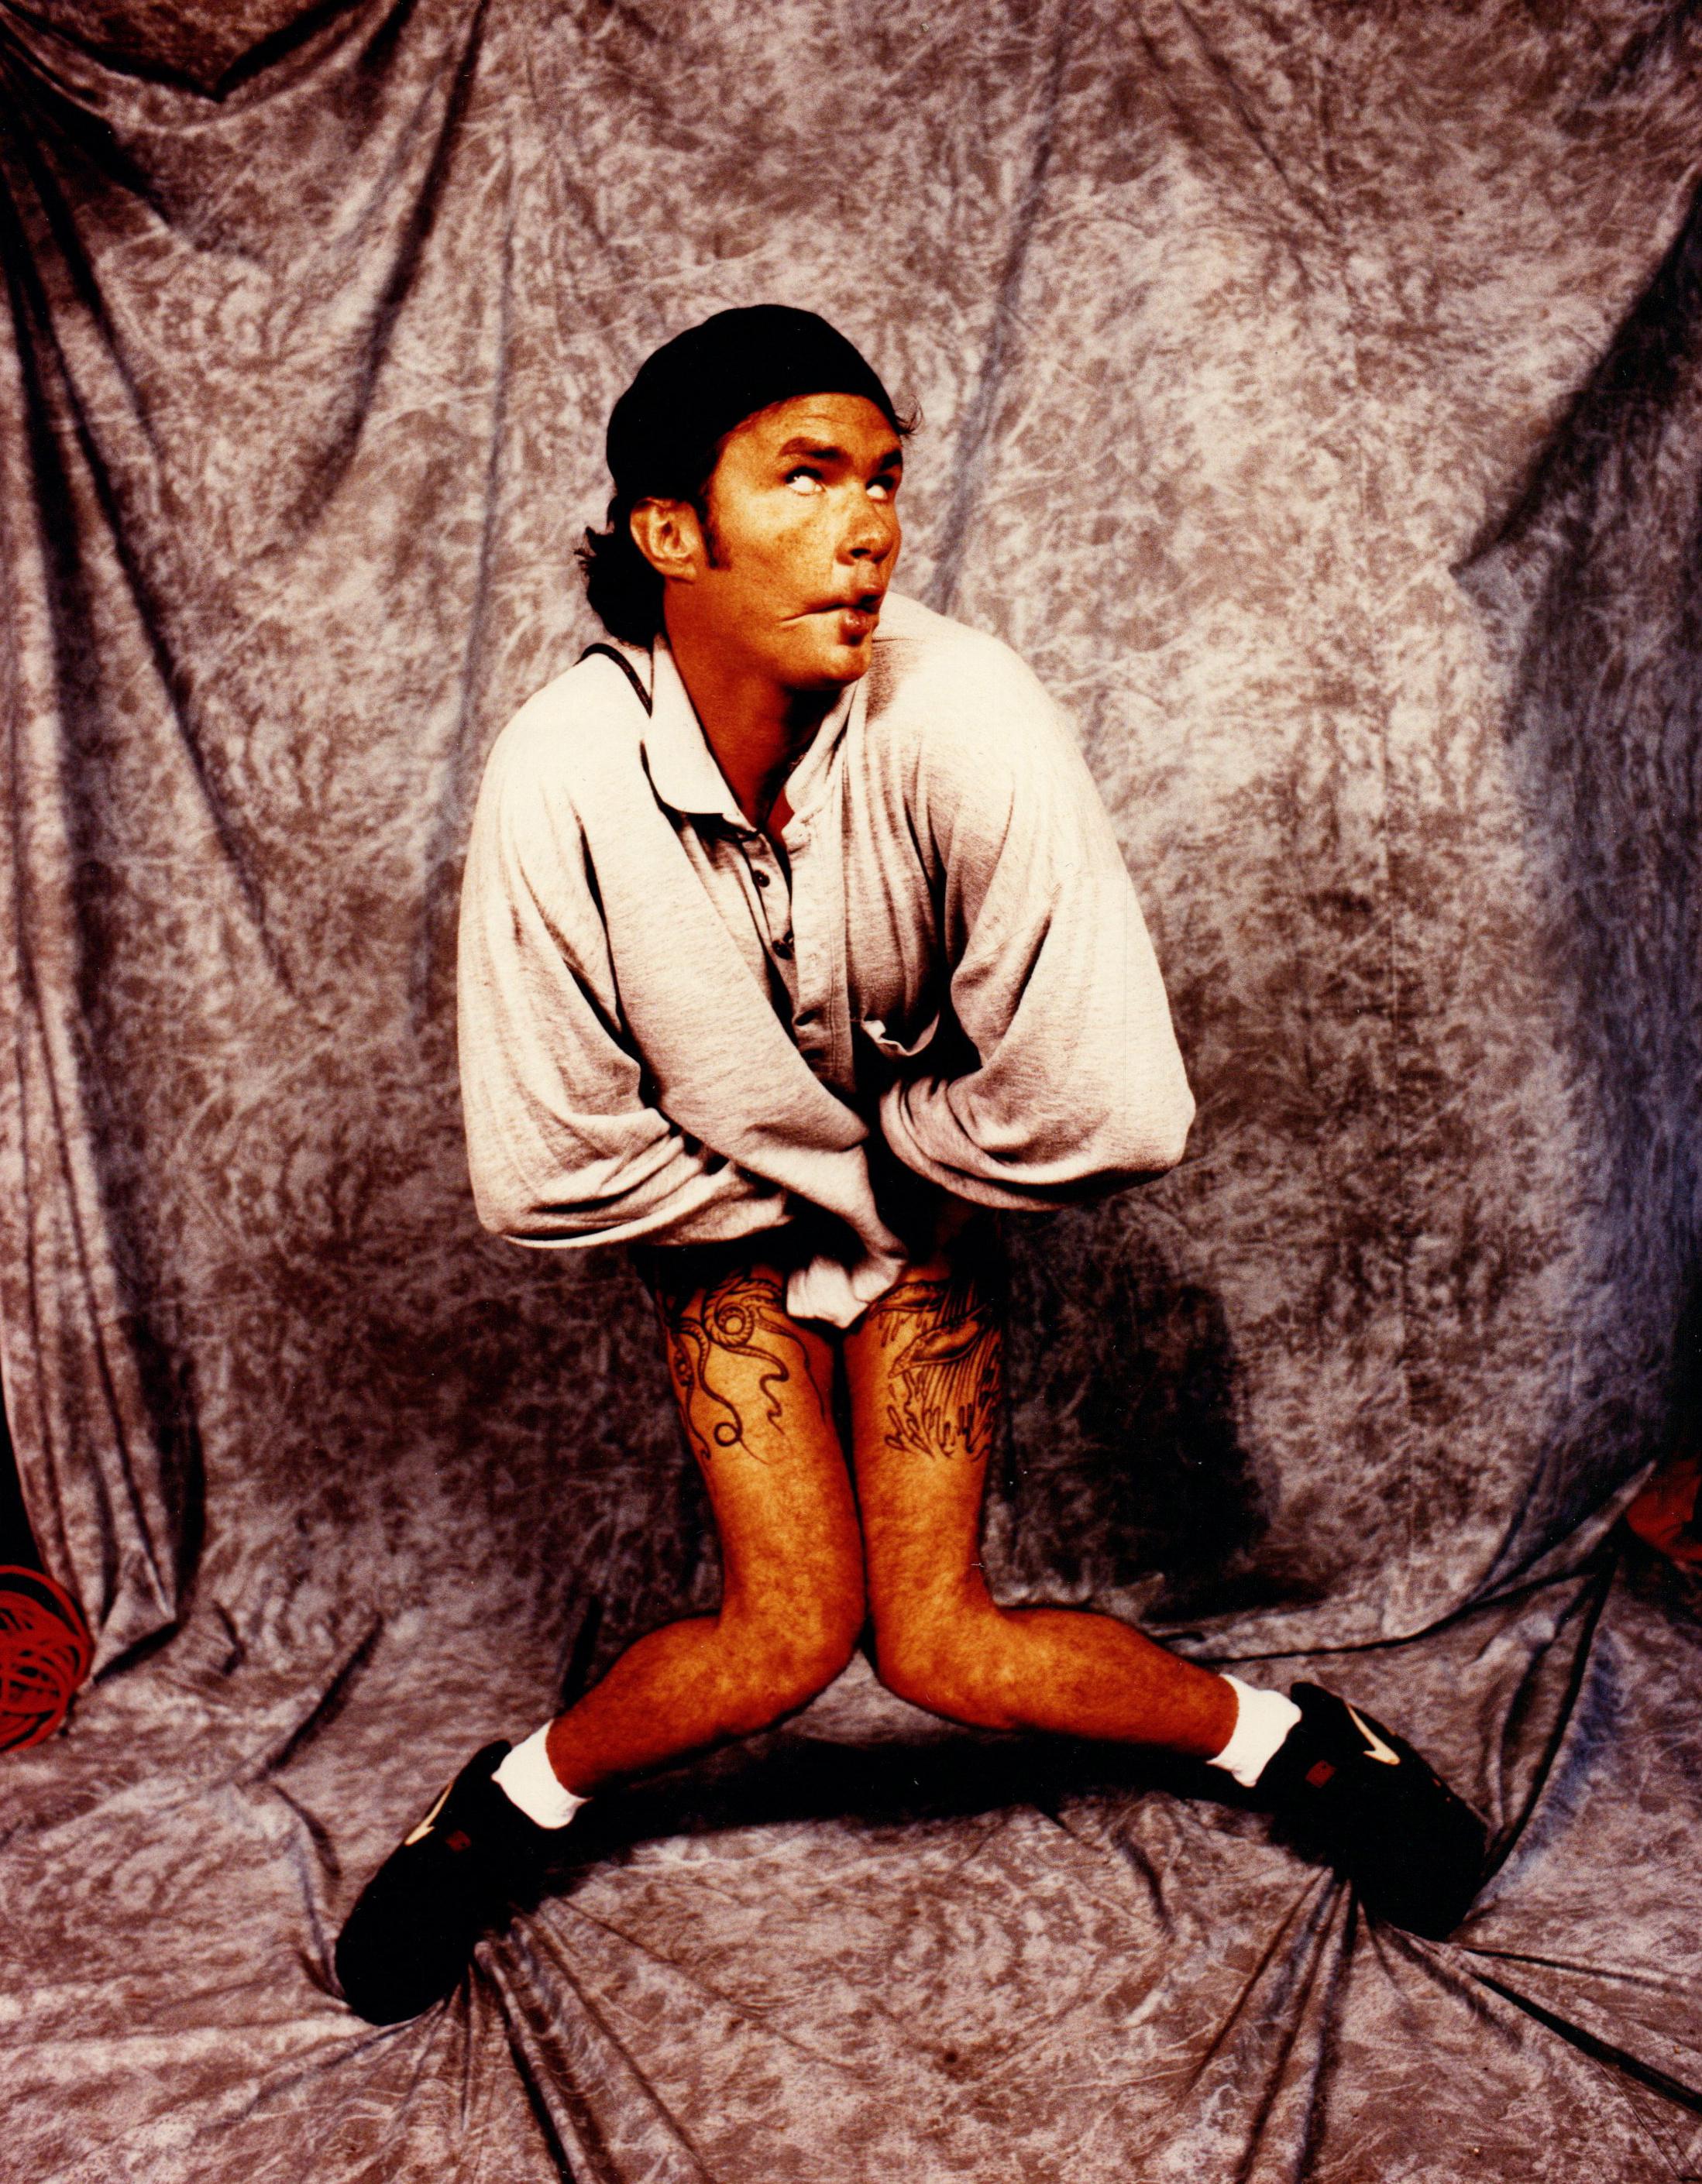 Paul Beauchemin Portrait Photograph - Chad Smith of Red Hot Chili Peppers Comical Portrait Vintage Original Photograph